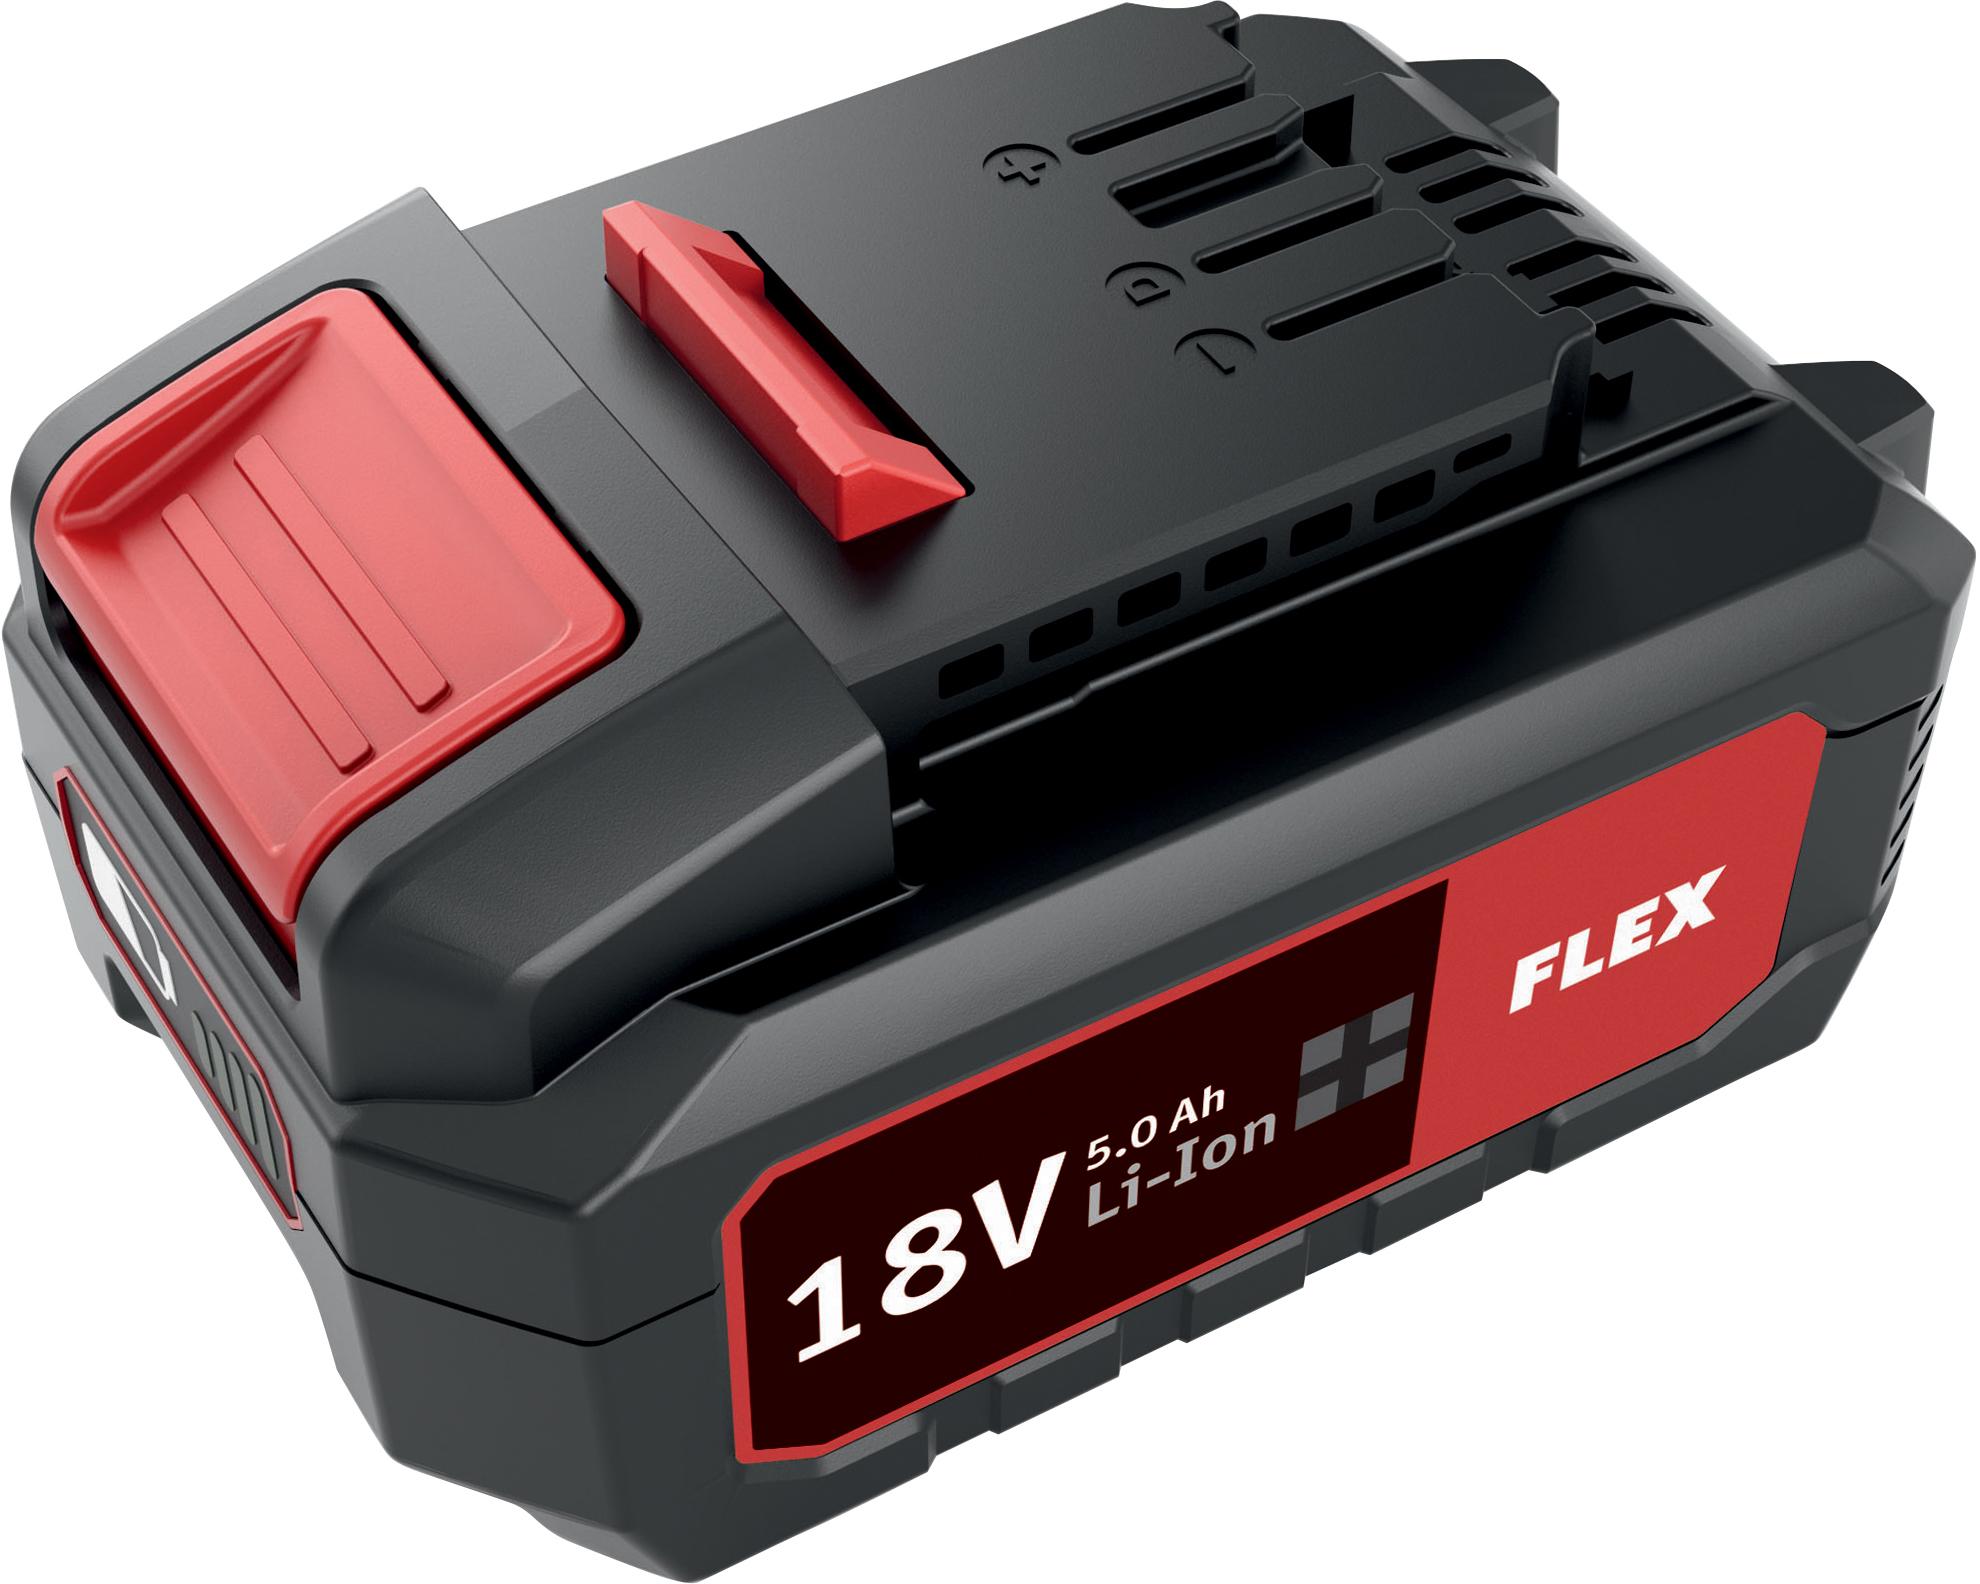 Flex Ap 18.0/5.0  5Ah 18V Battery